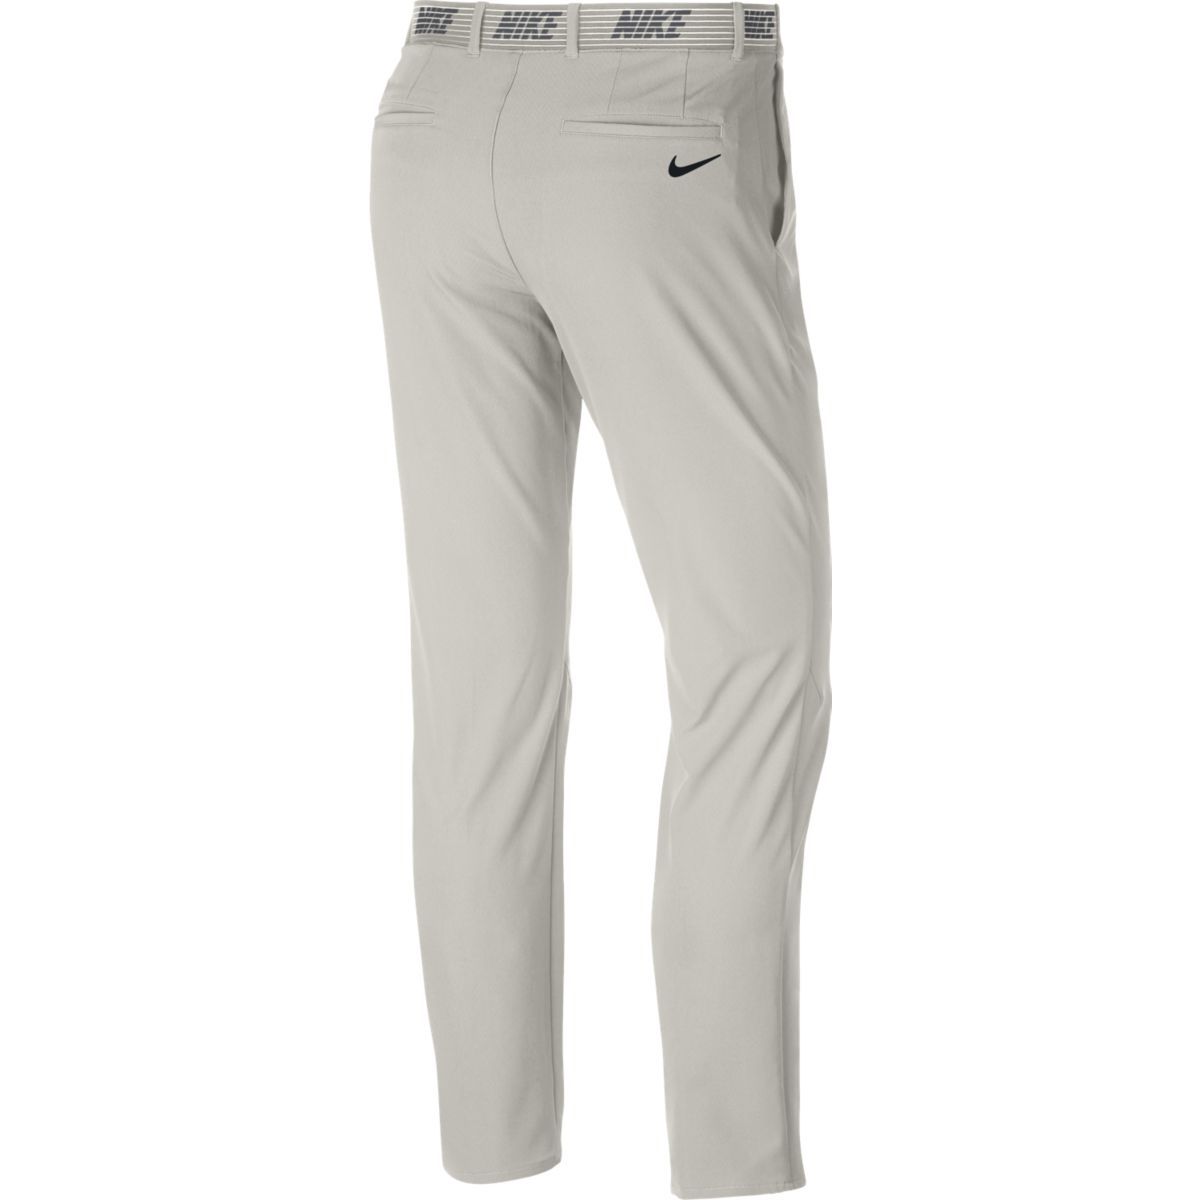 Nike Slim Flex Golf Pants 891887 